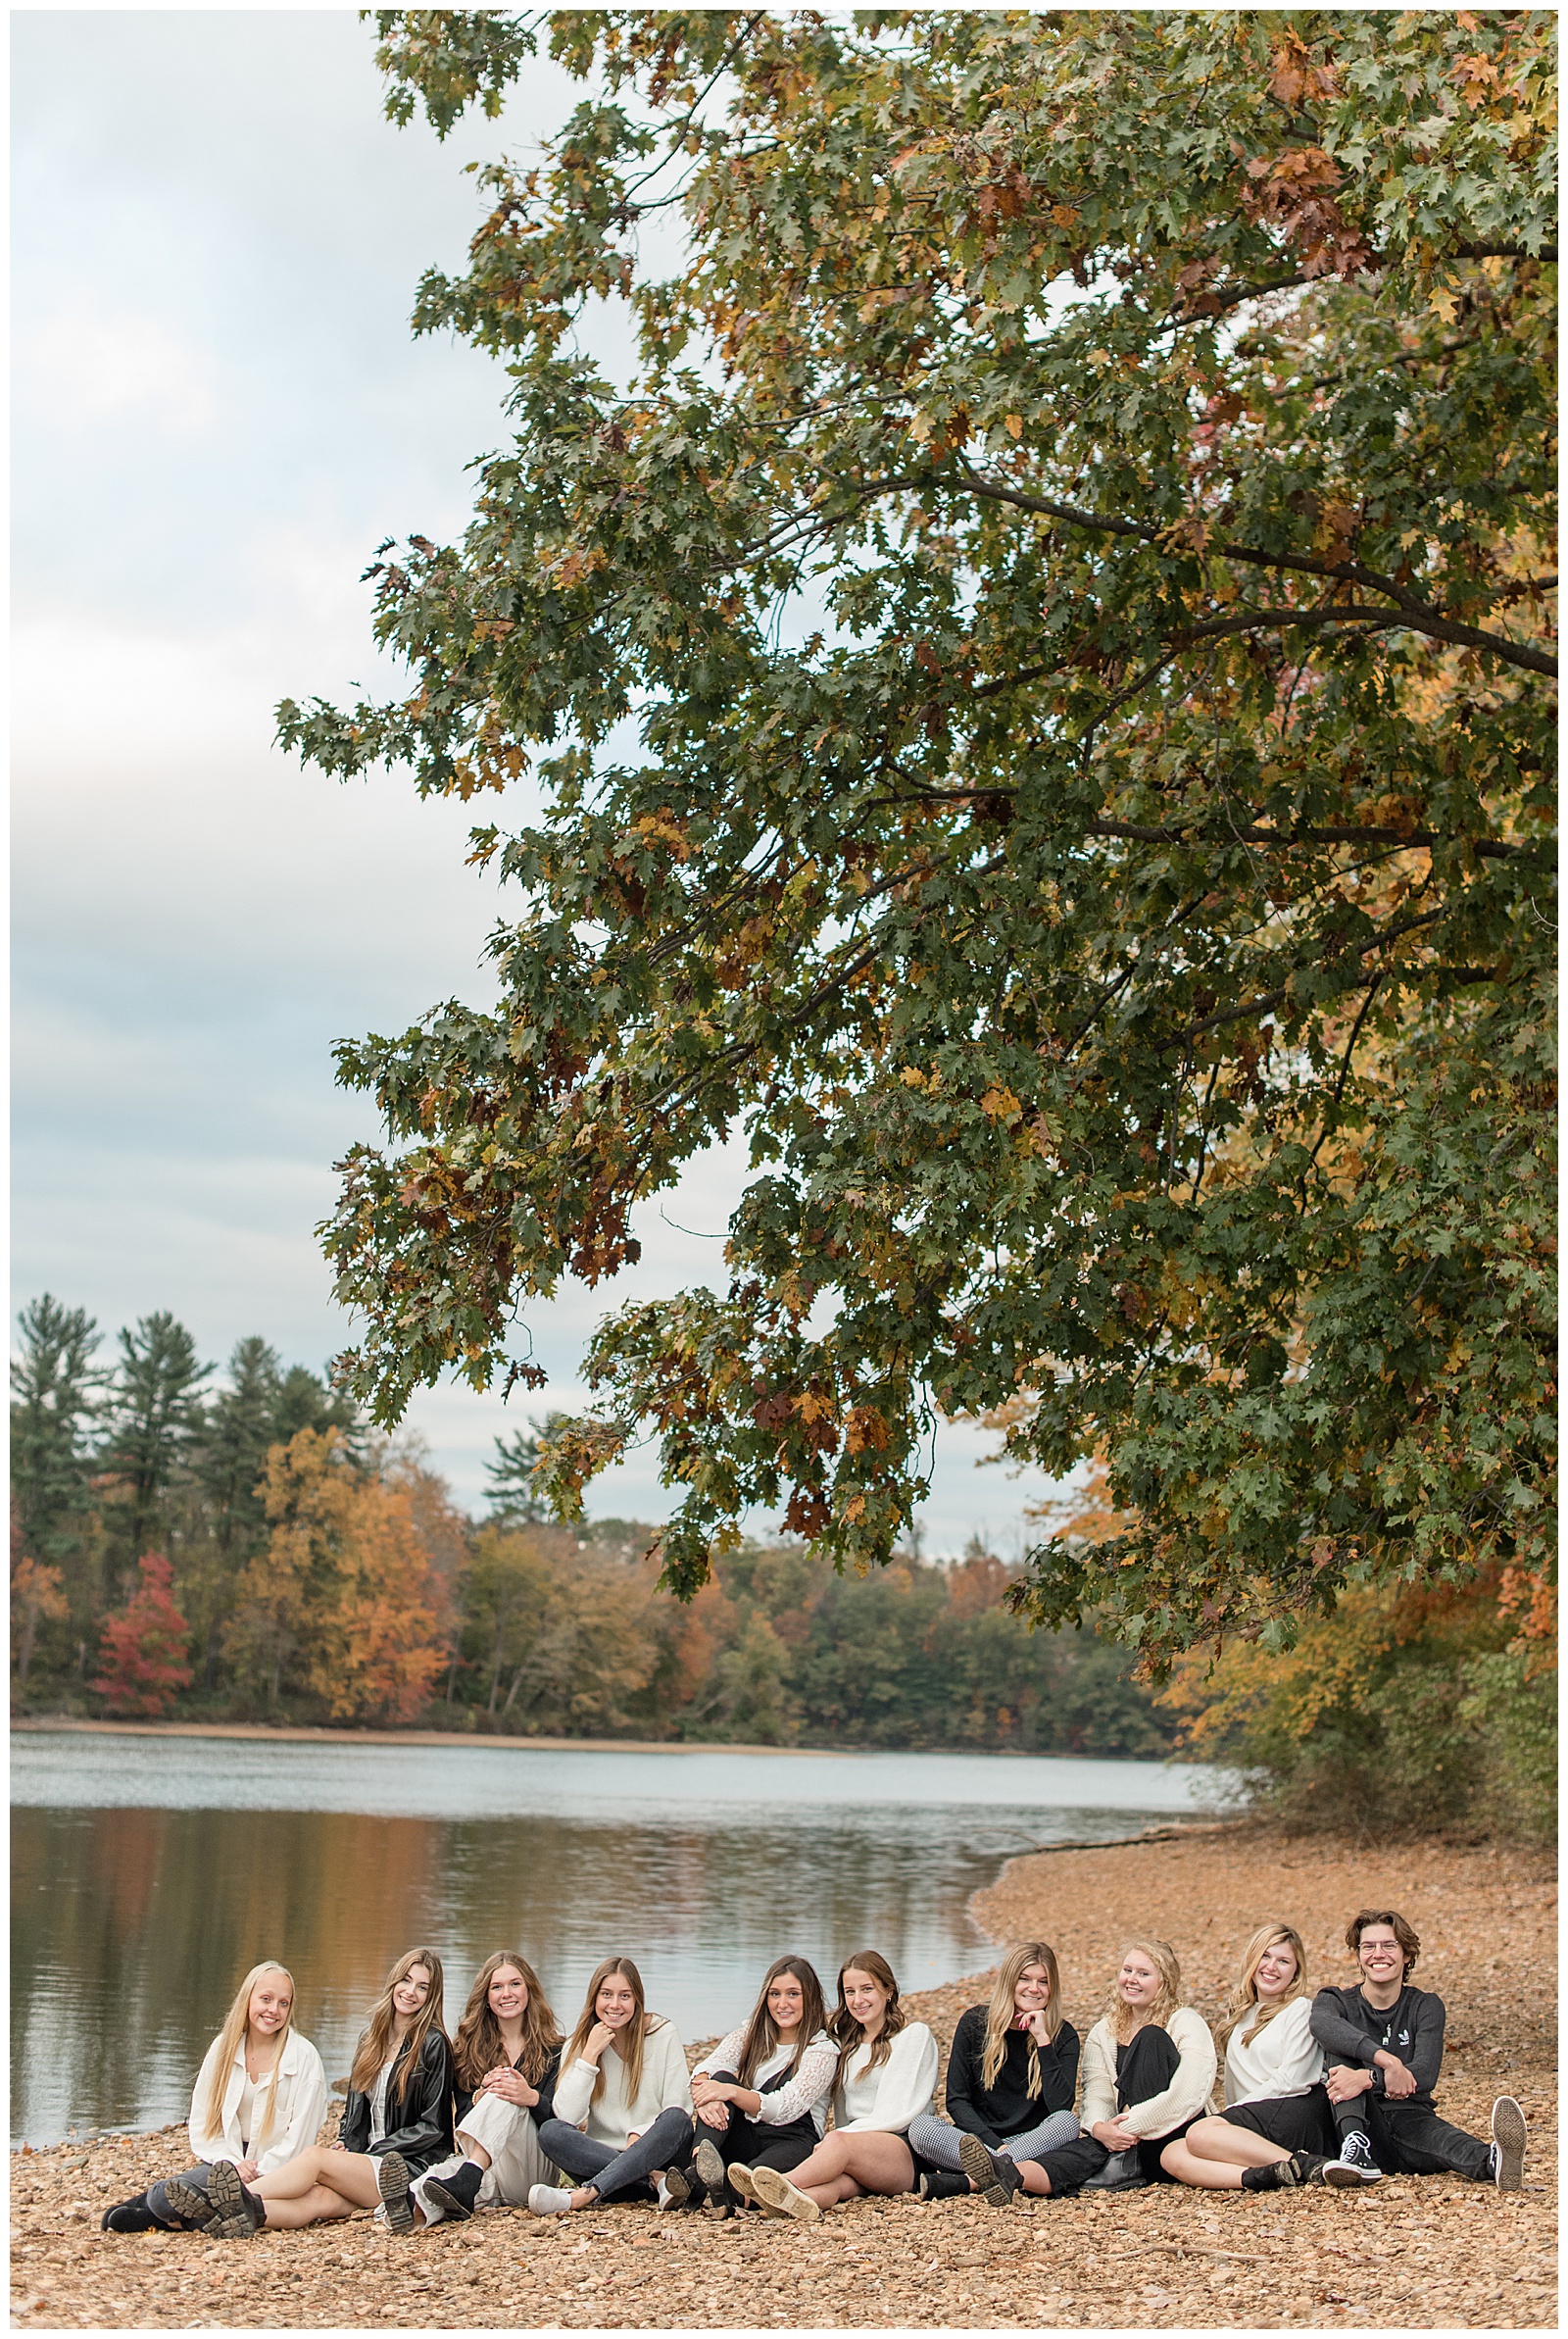 ten senior spokesmodels all sitting side-by-side on leaf-covered ground beside lake at reservoir park in york pennsylvania